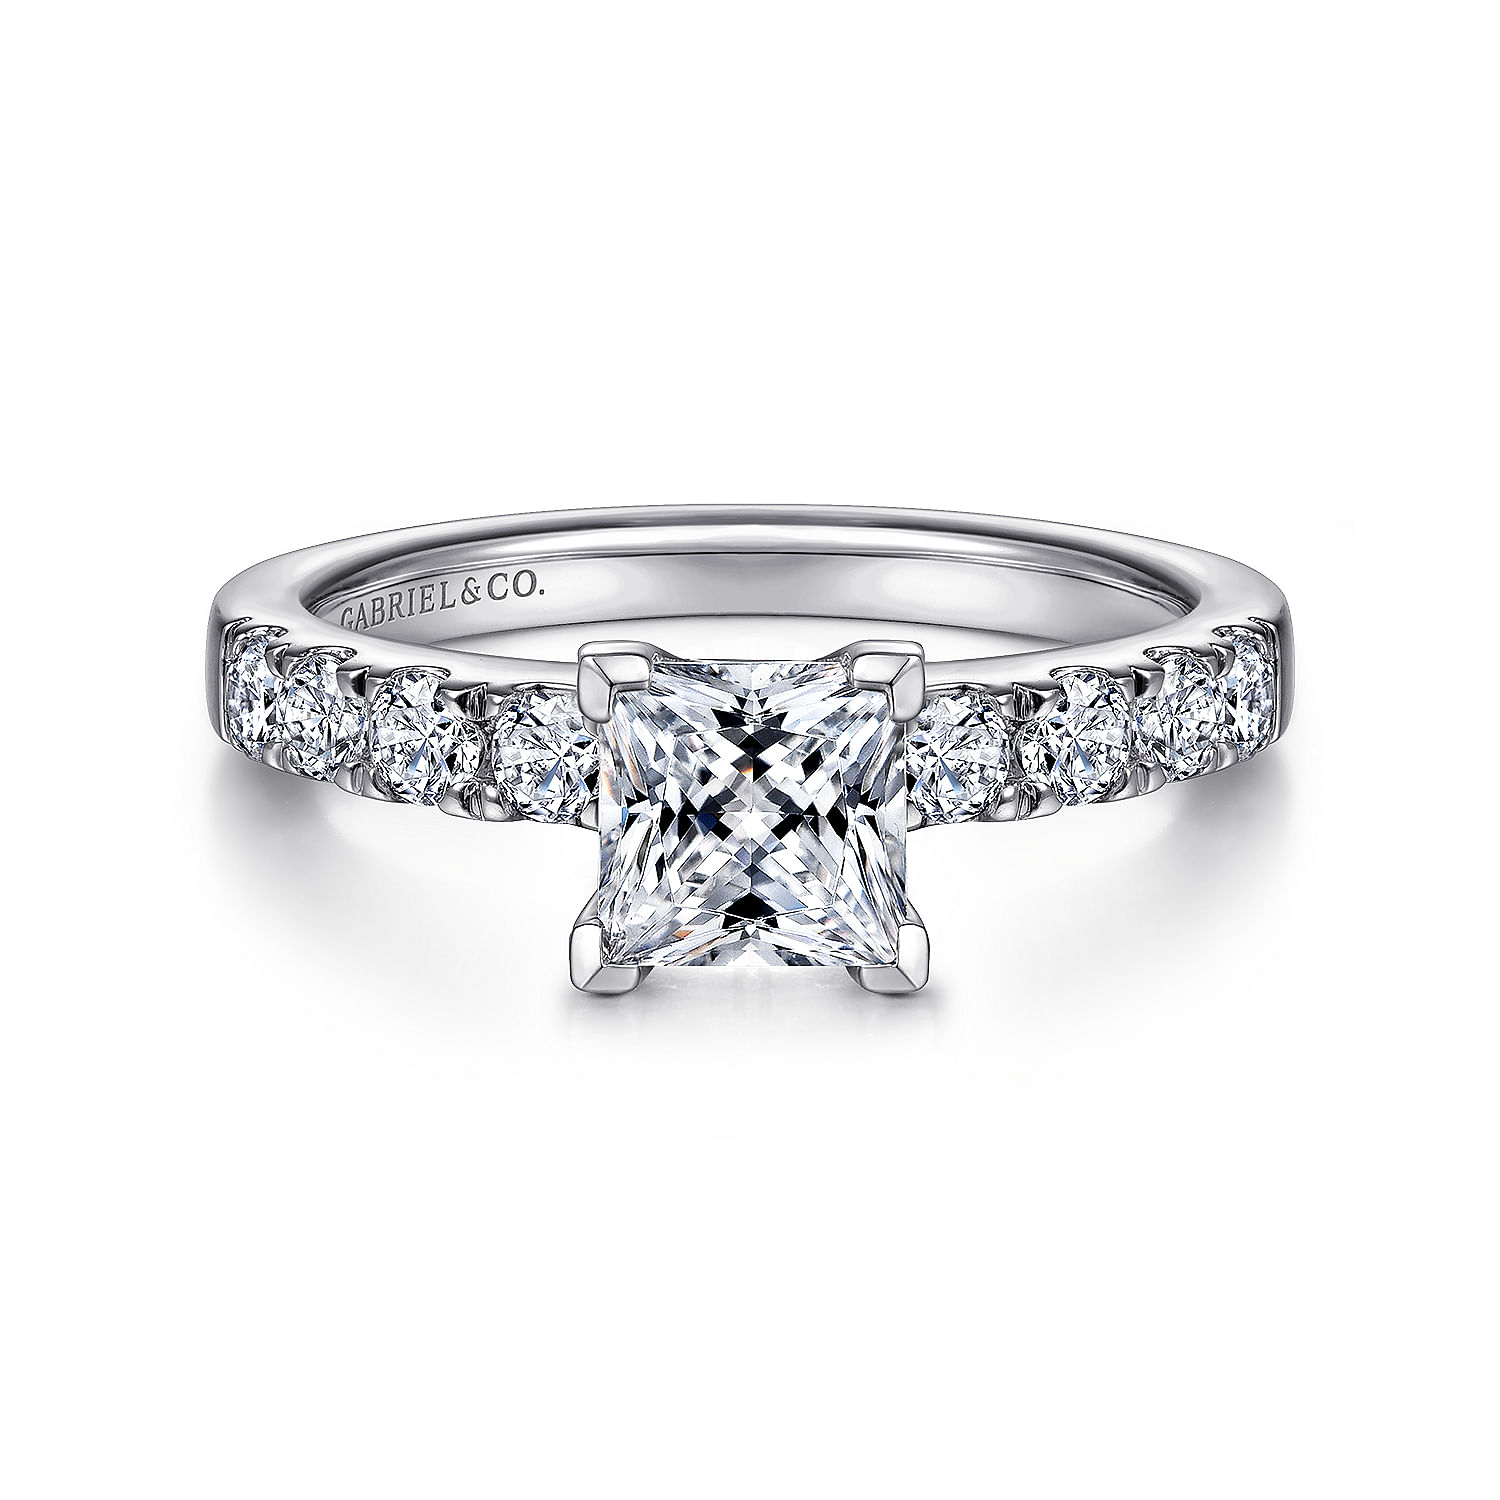 Wyatt - 14K White Gold Princess Cut Diamond Engagement Ring